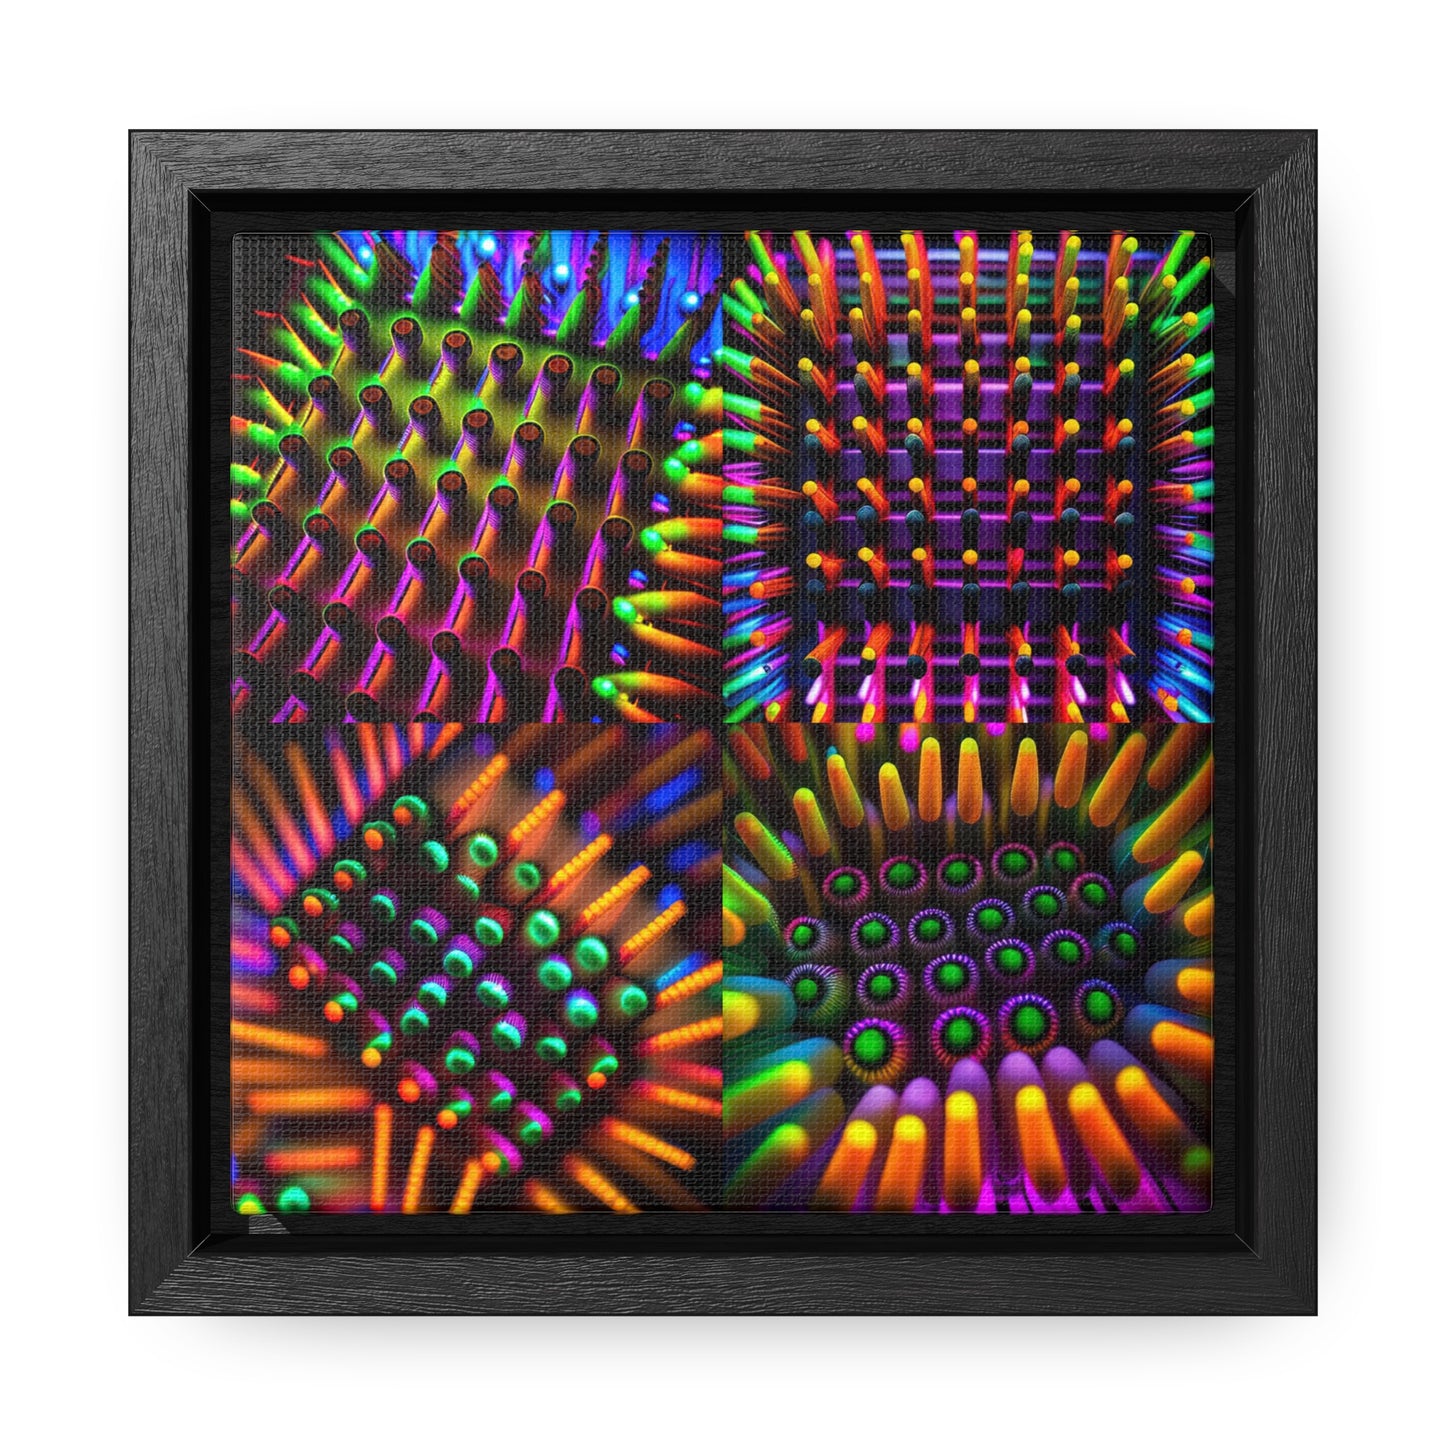 Gallery Canvas Wraps, Square Frame Macro Cactus neon square